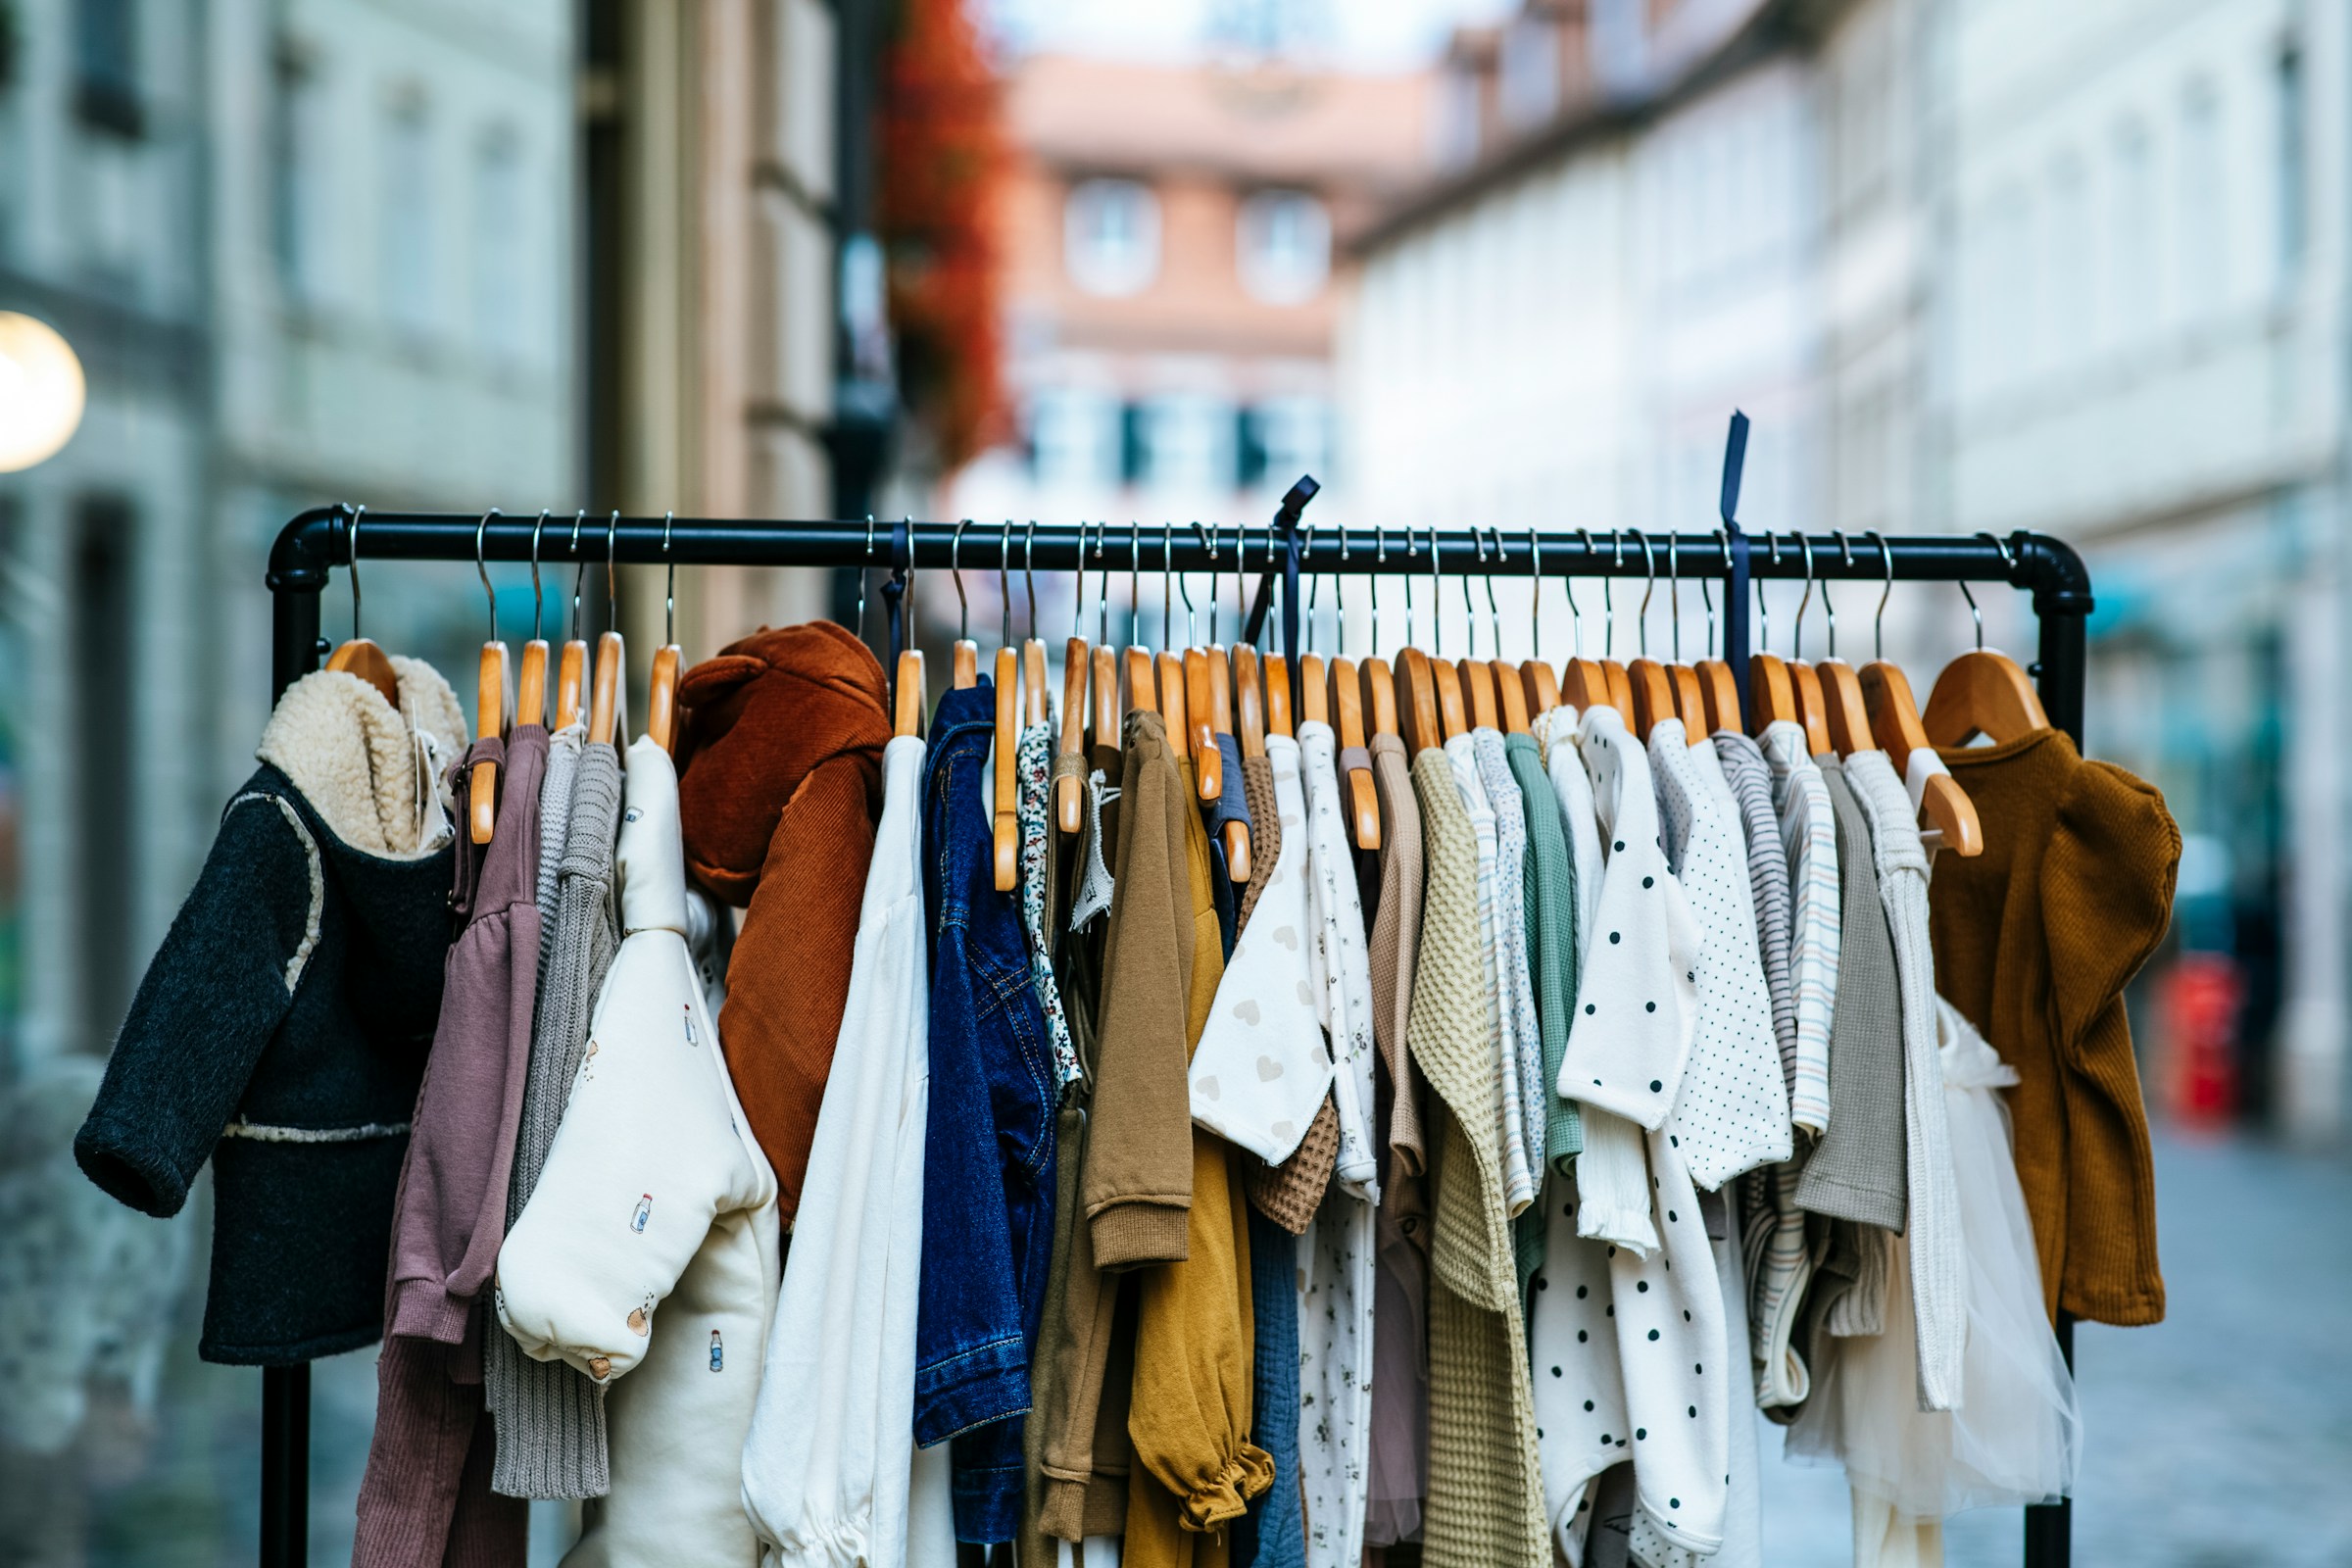 A rack of children's clothing | Source: Unsplash